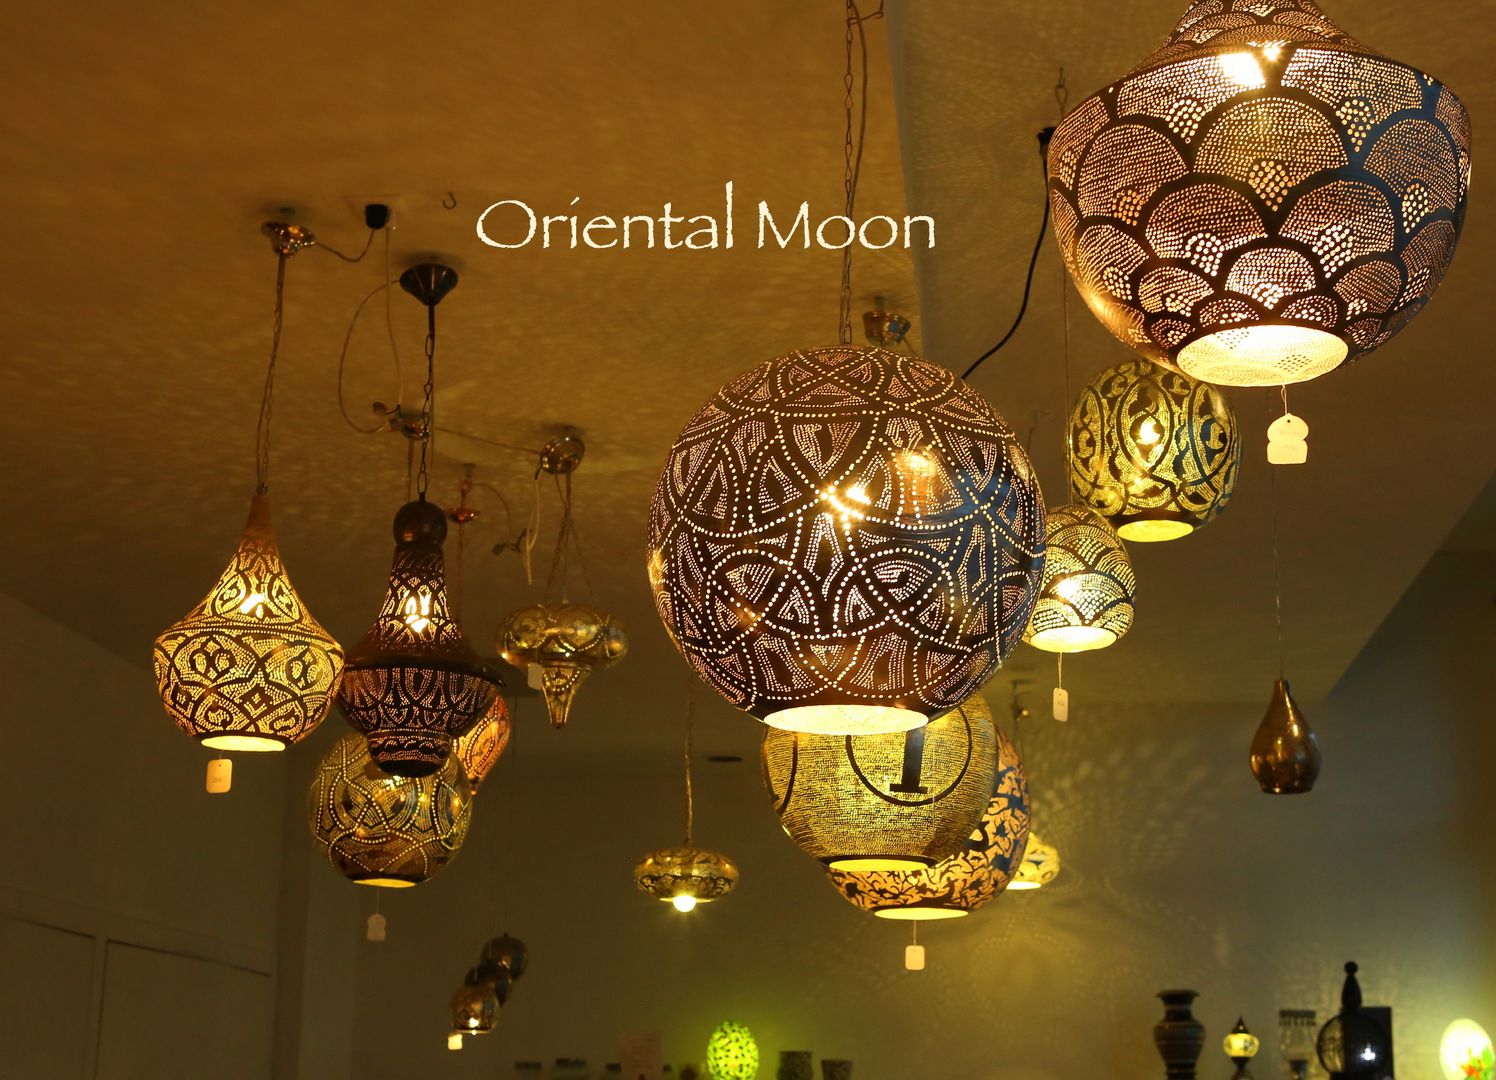 Orientalische Boden/Tisch-Lampen, Oriental Moon Oriental Moon 에클레틱 거실 구리 / 청동 / 황동 조명